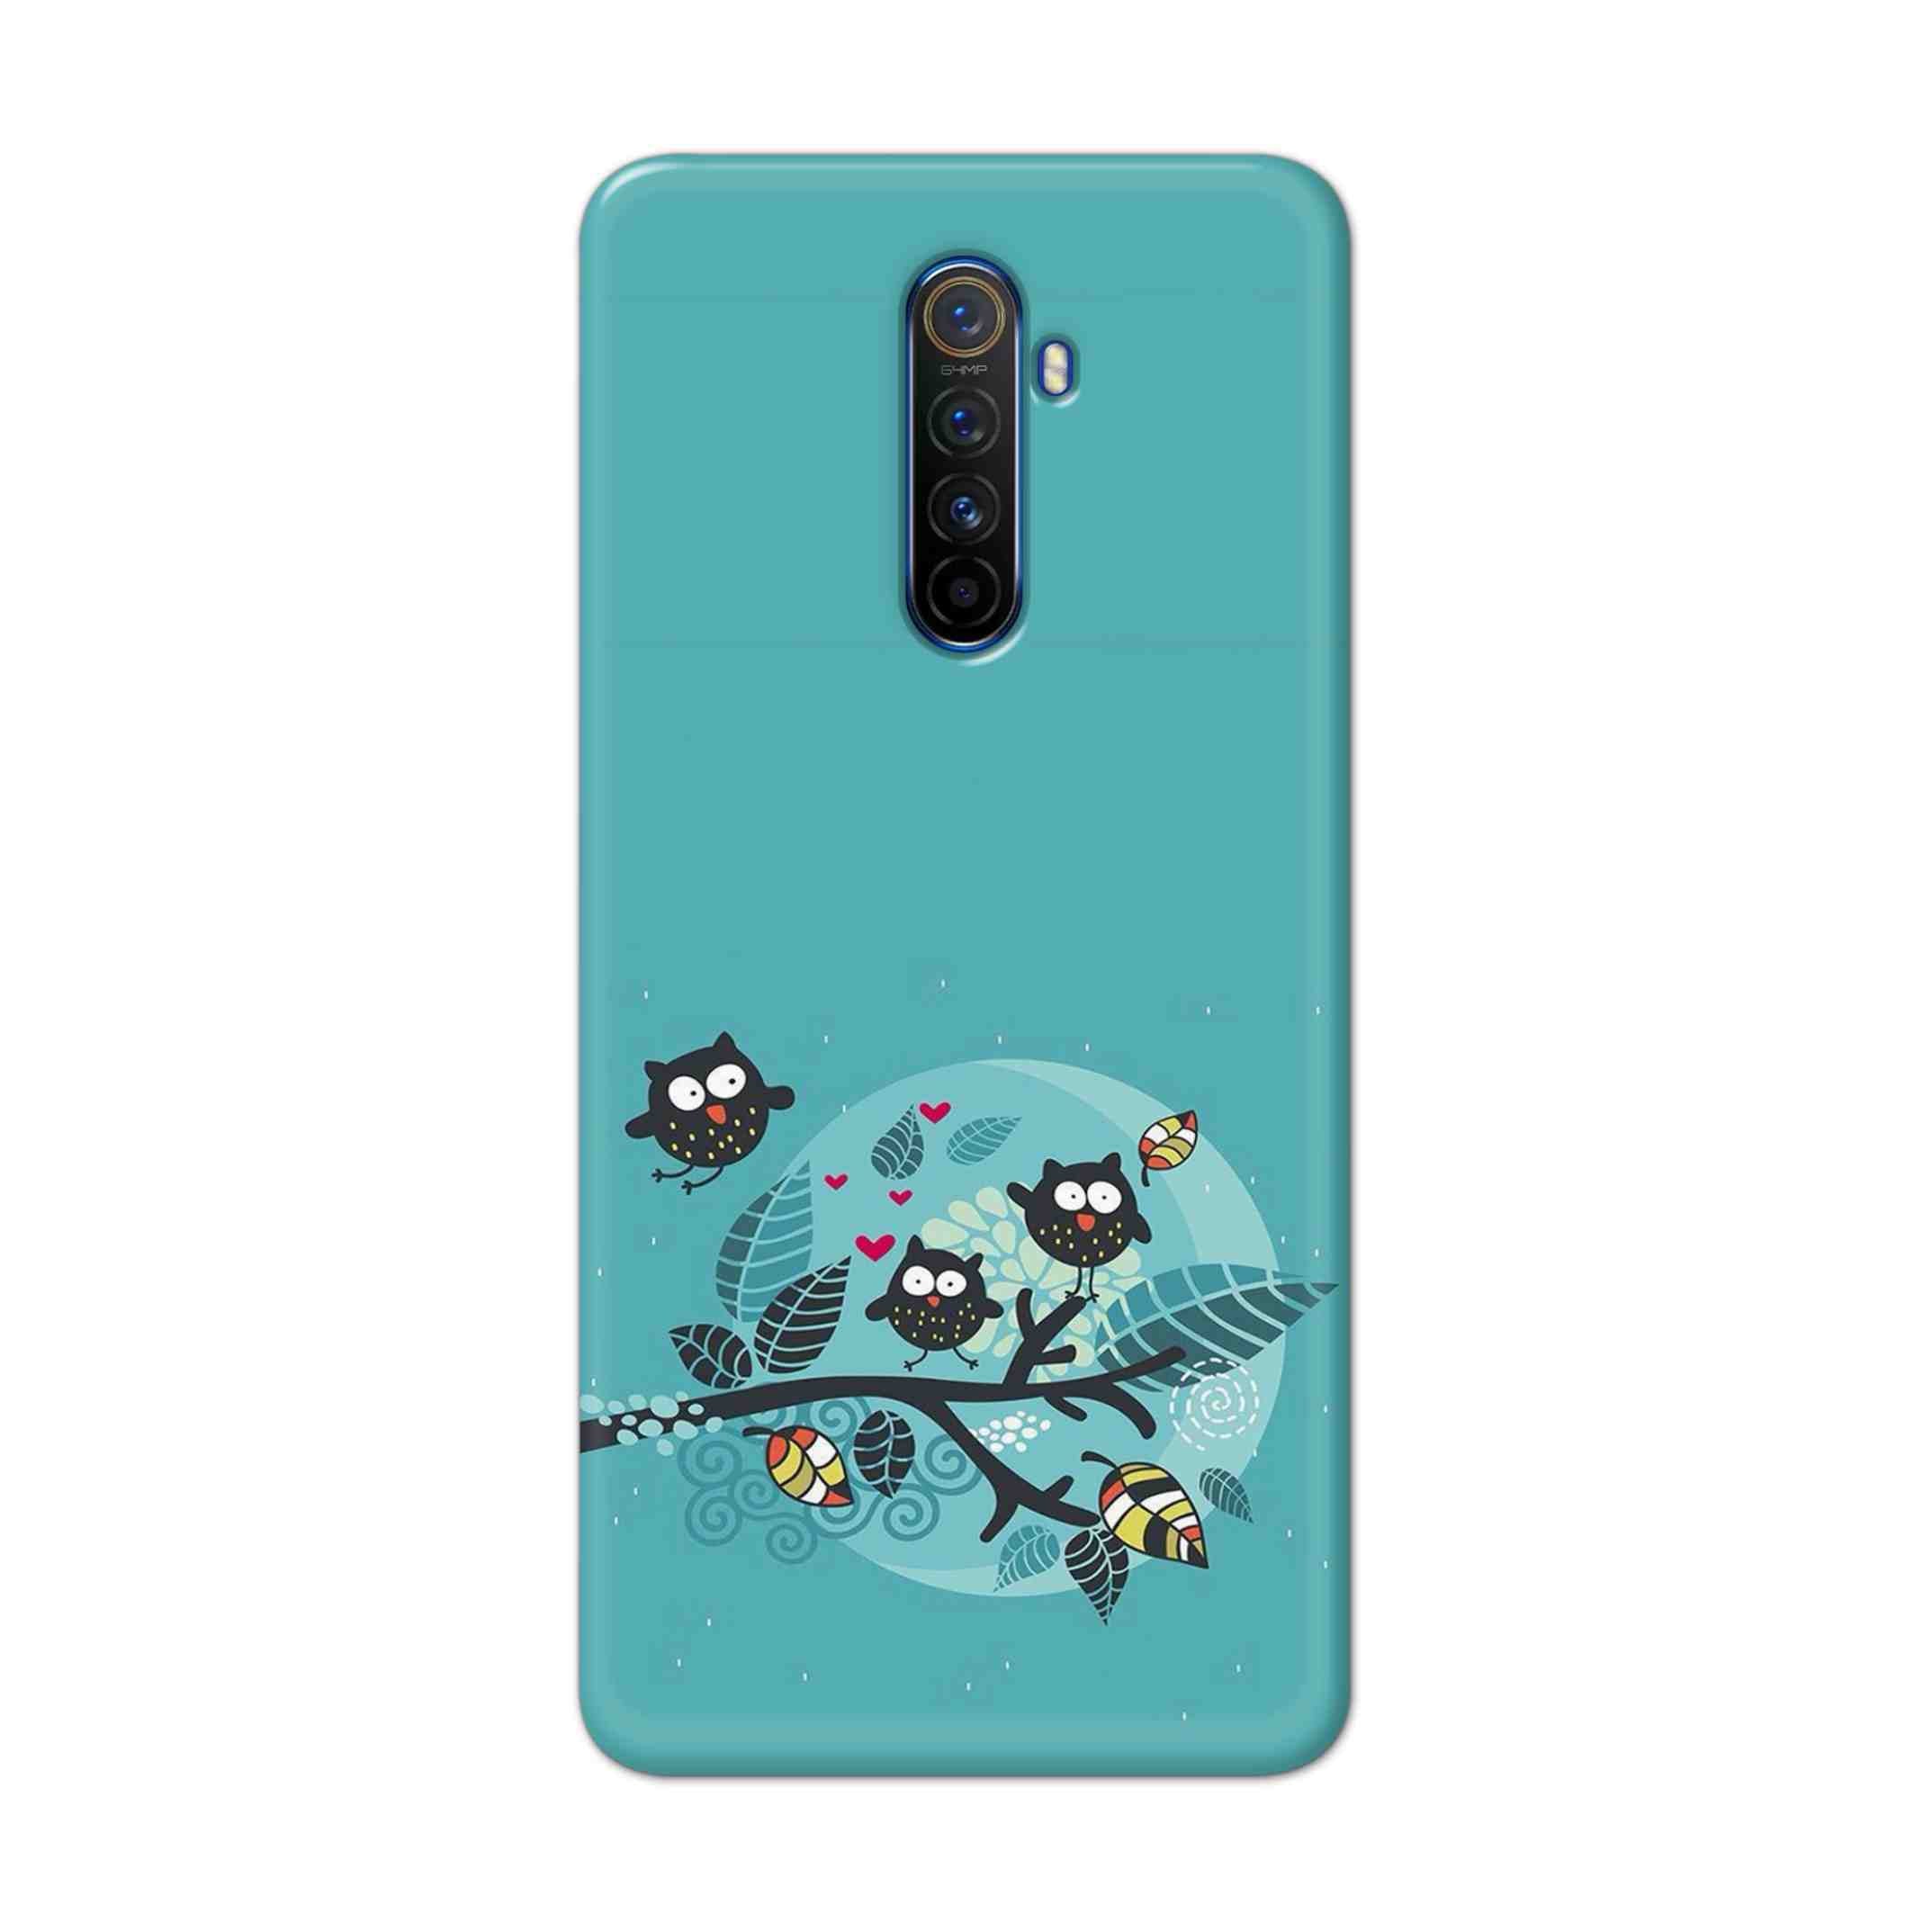 Buy Owl Hard Back Mobile Phone Case Cover For Realme X2 Pro Online